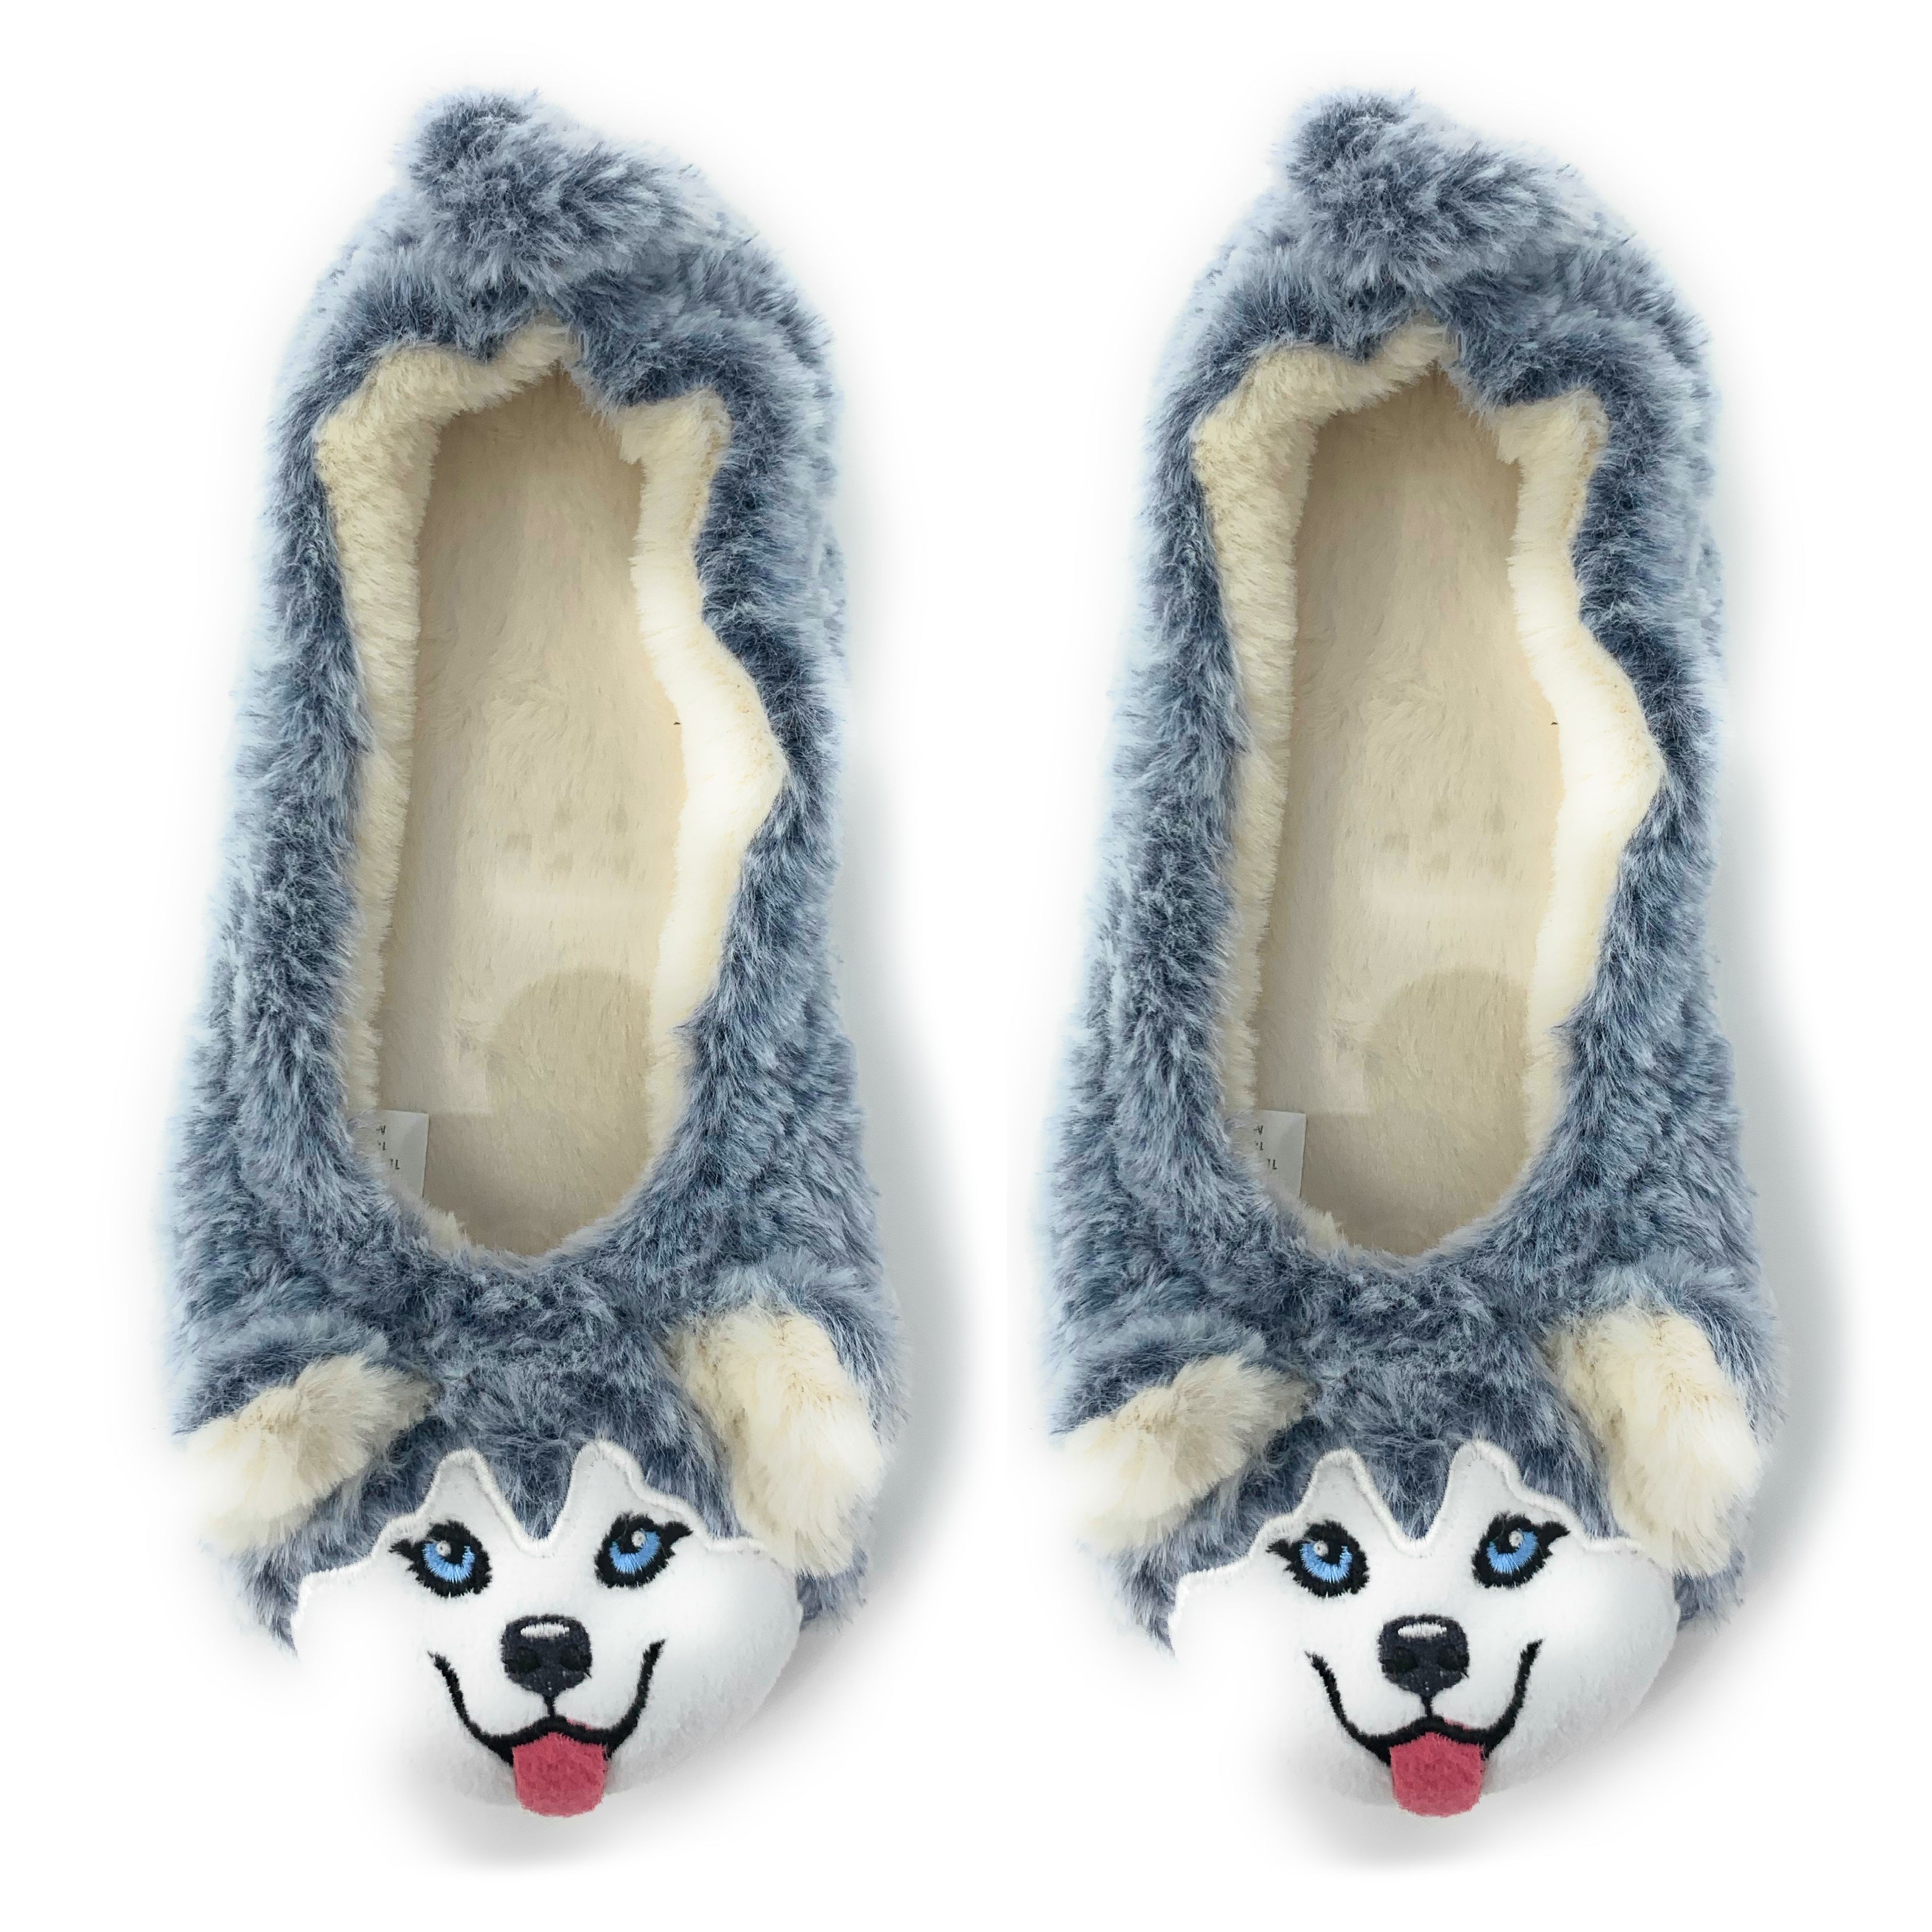 Husky Plush Slippers | House Shoes | Oooh Yeah! Socks